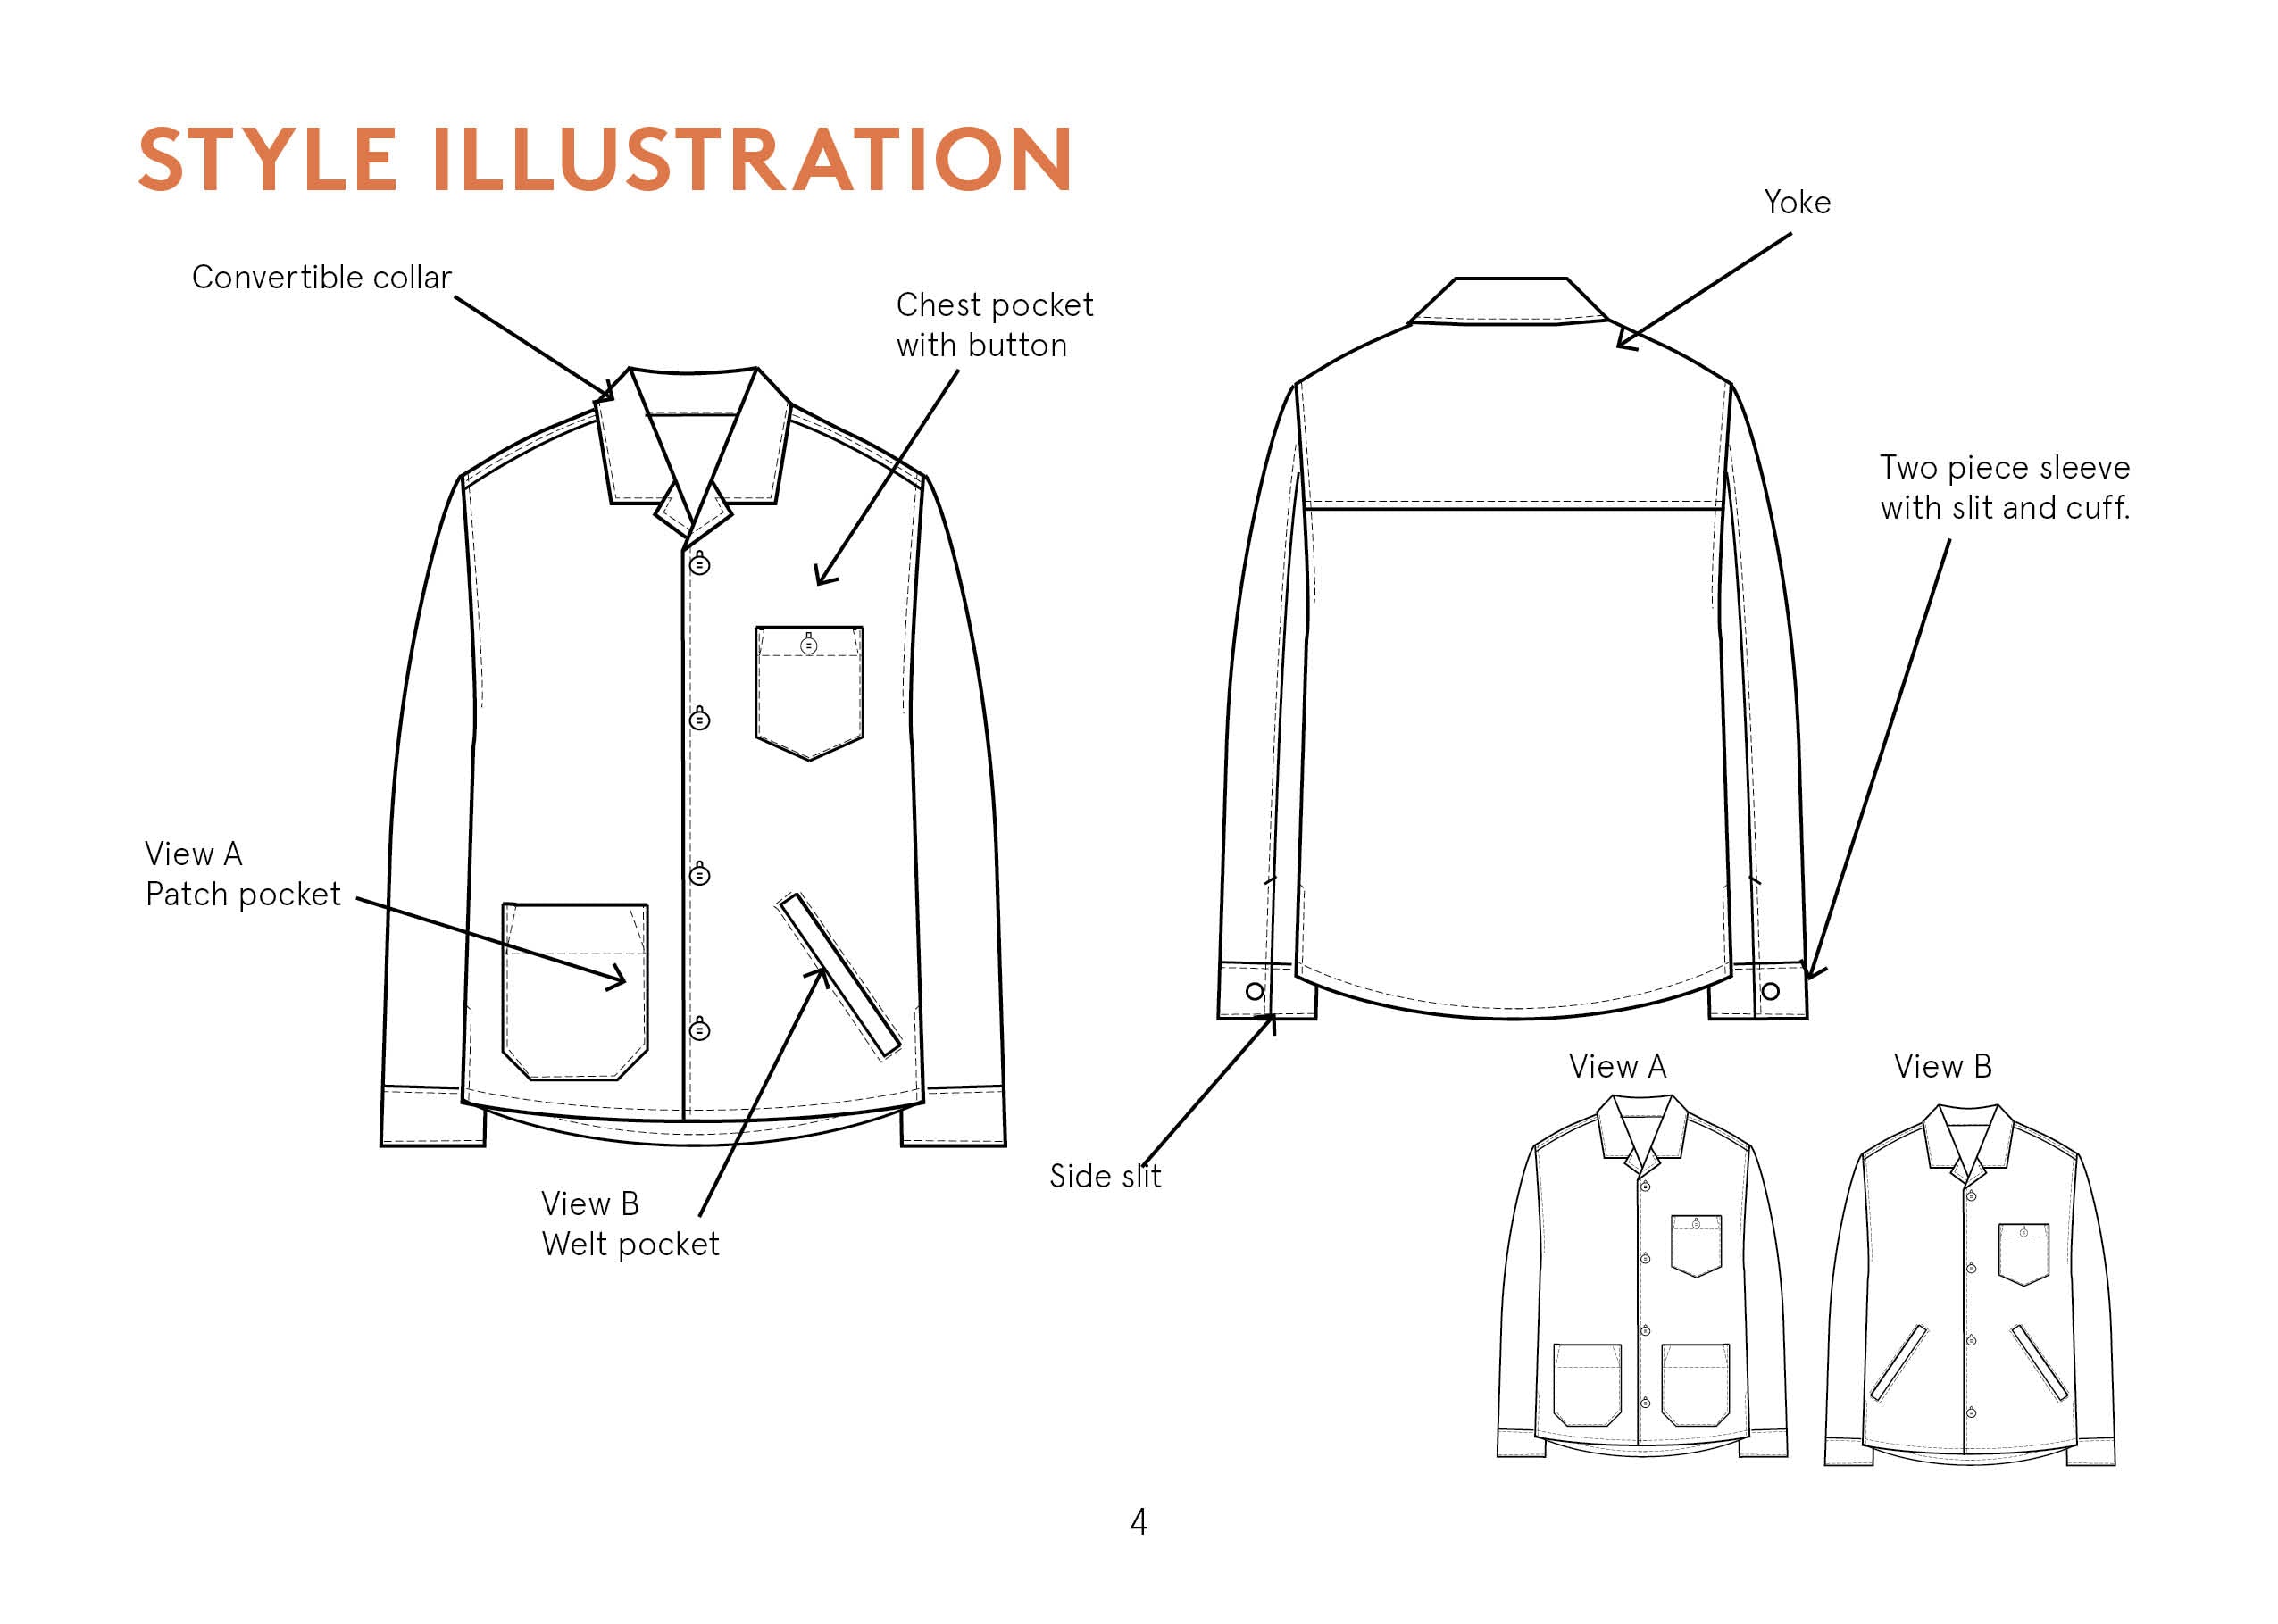 Overshirt Jacket - Sewing Pattern | Wardrobe By Me